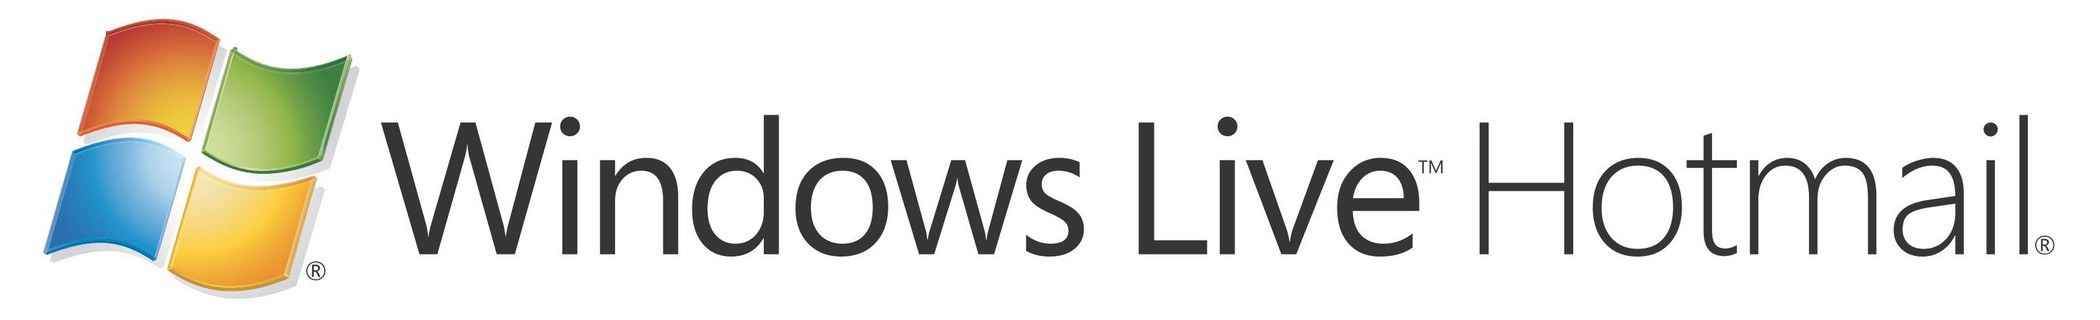 Windows Live Hotmail Logo png